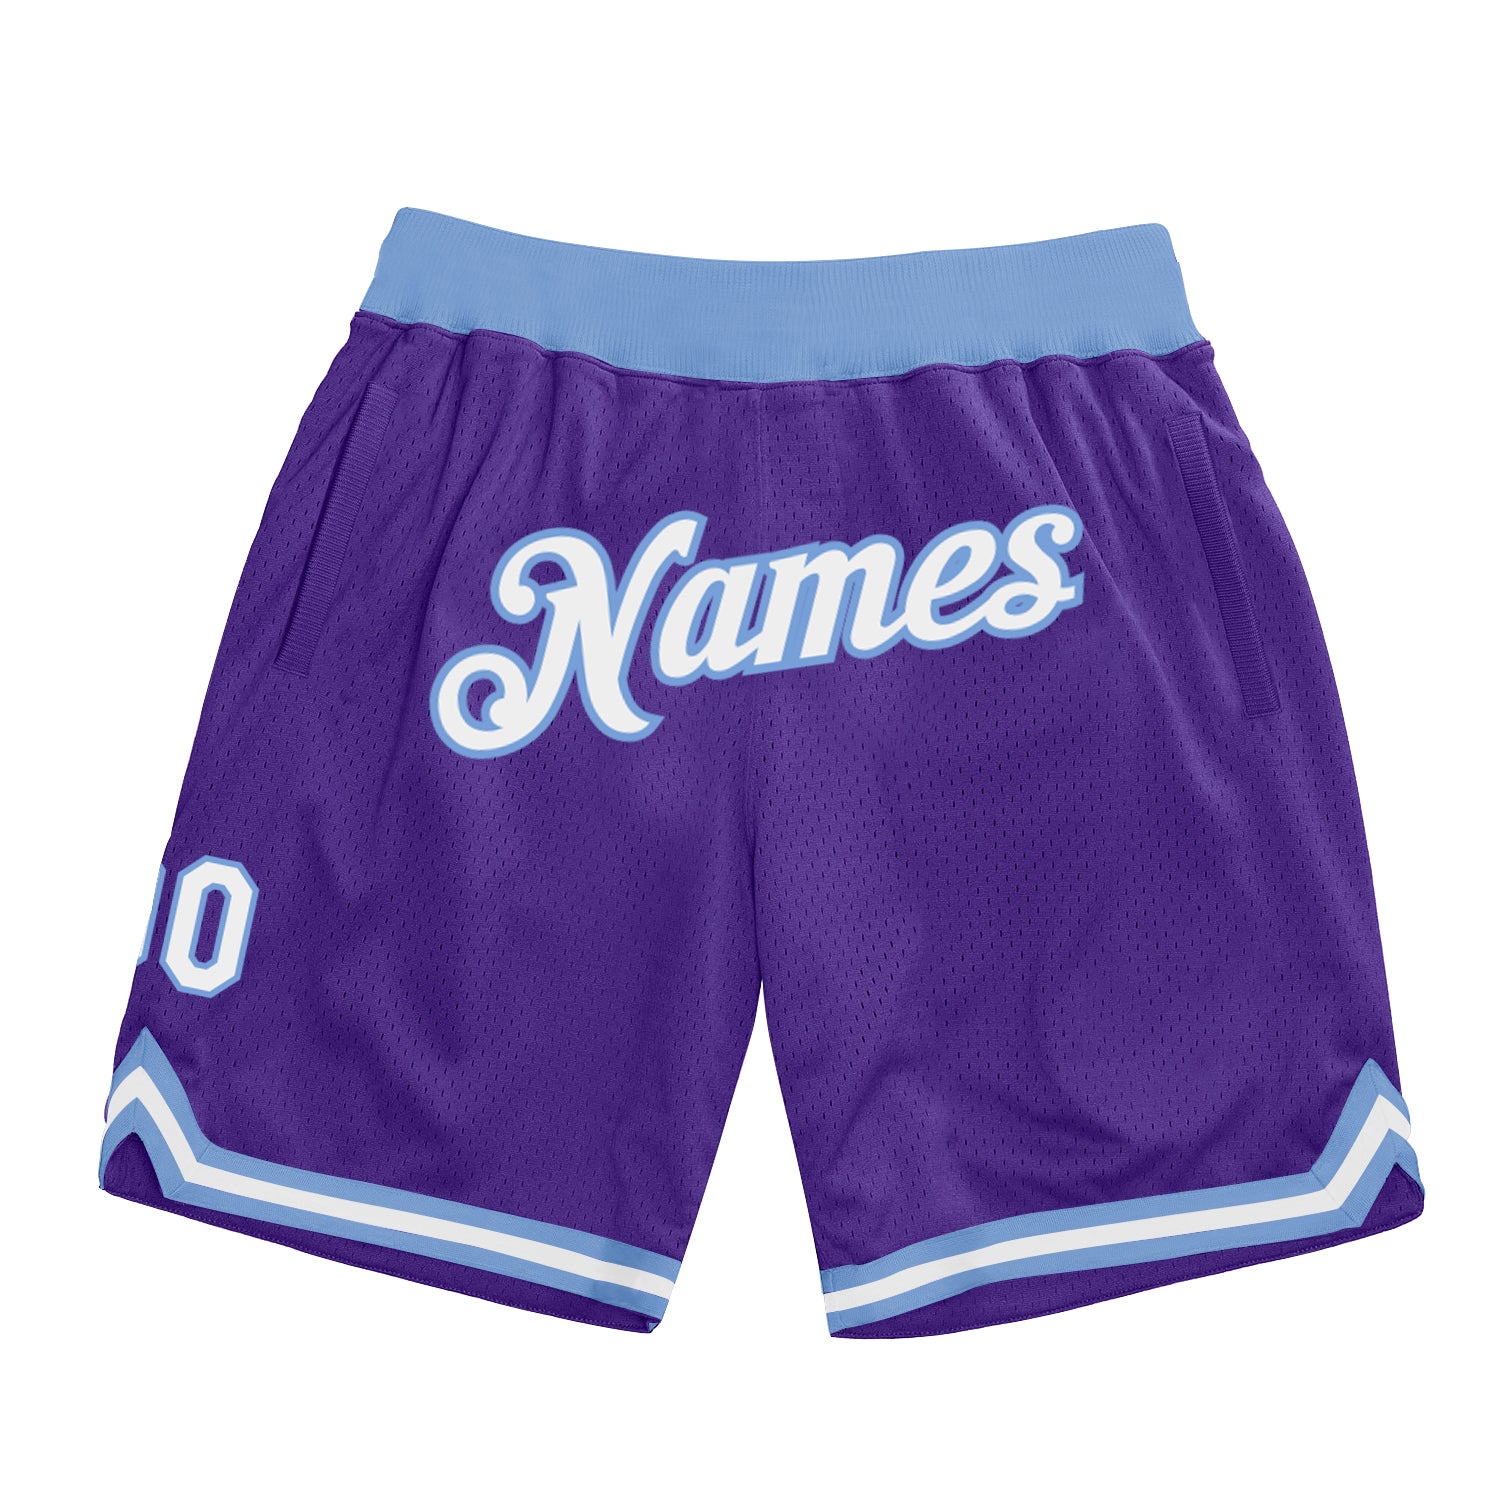 lakers front logo shorts